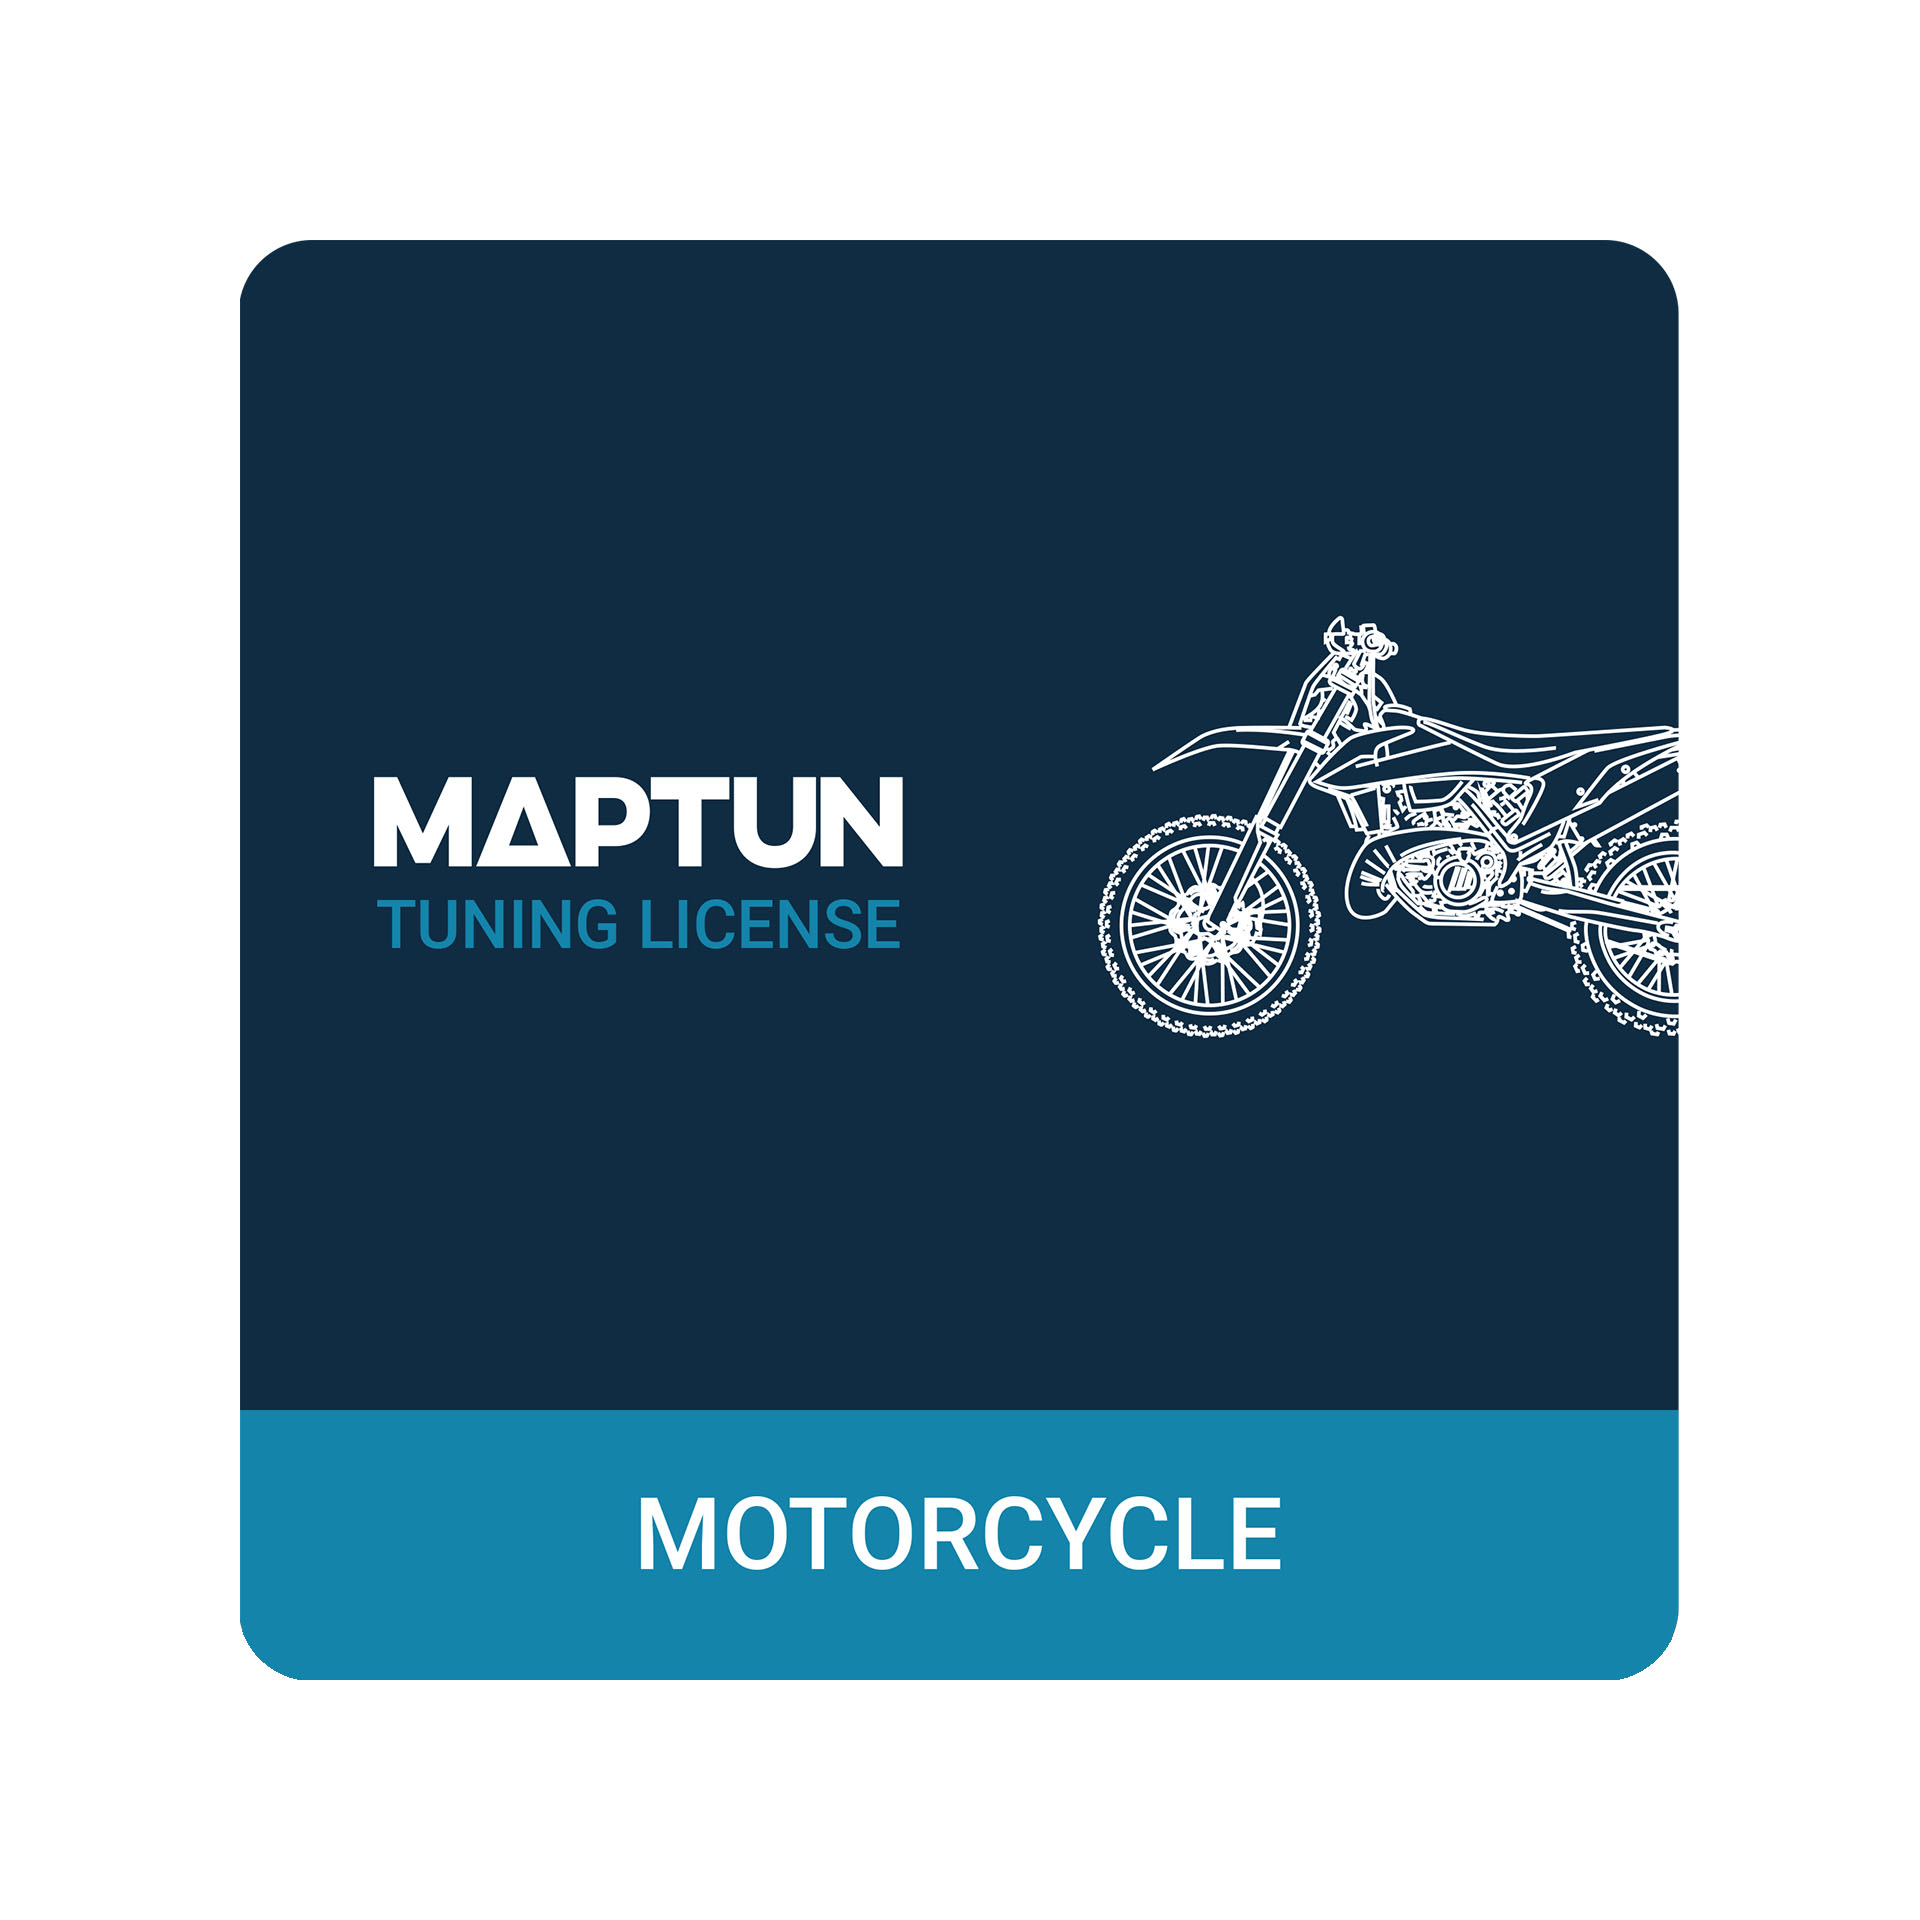 Motorcycle Licenses